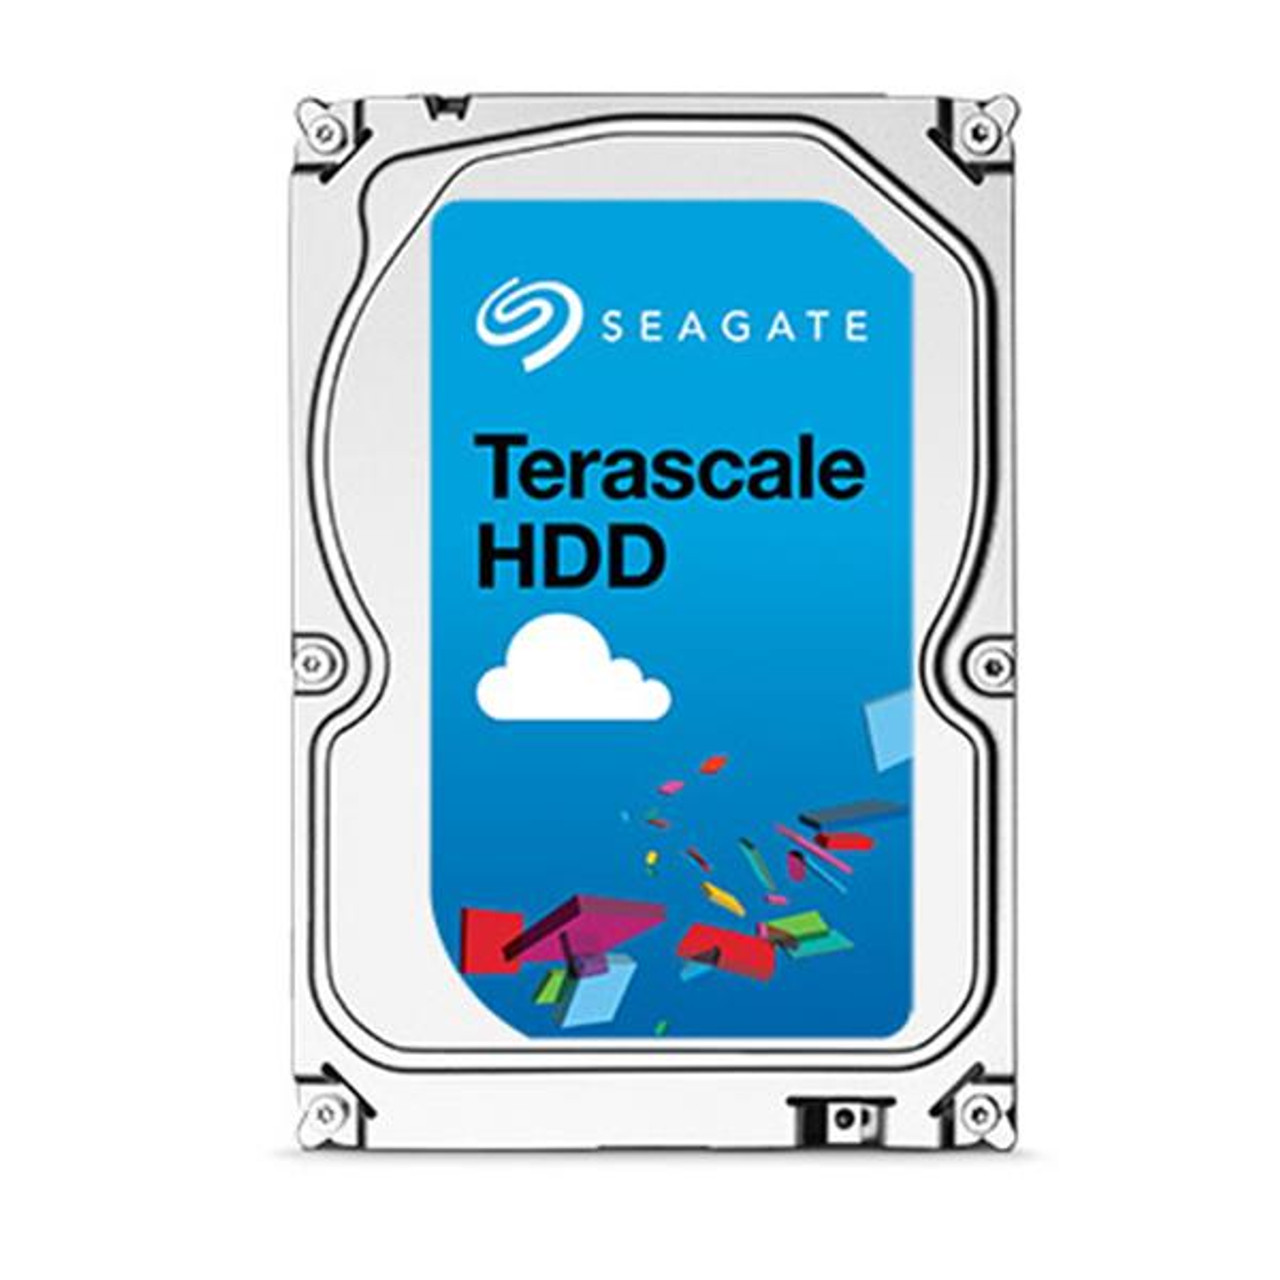 1FS168-001 - Seagate TERASCALE HDD 4TB 5900RPM SATA 6GB/s 3.5-inch 64MB Cache NON-ISE Internal Hard Drive